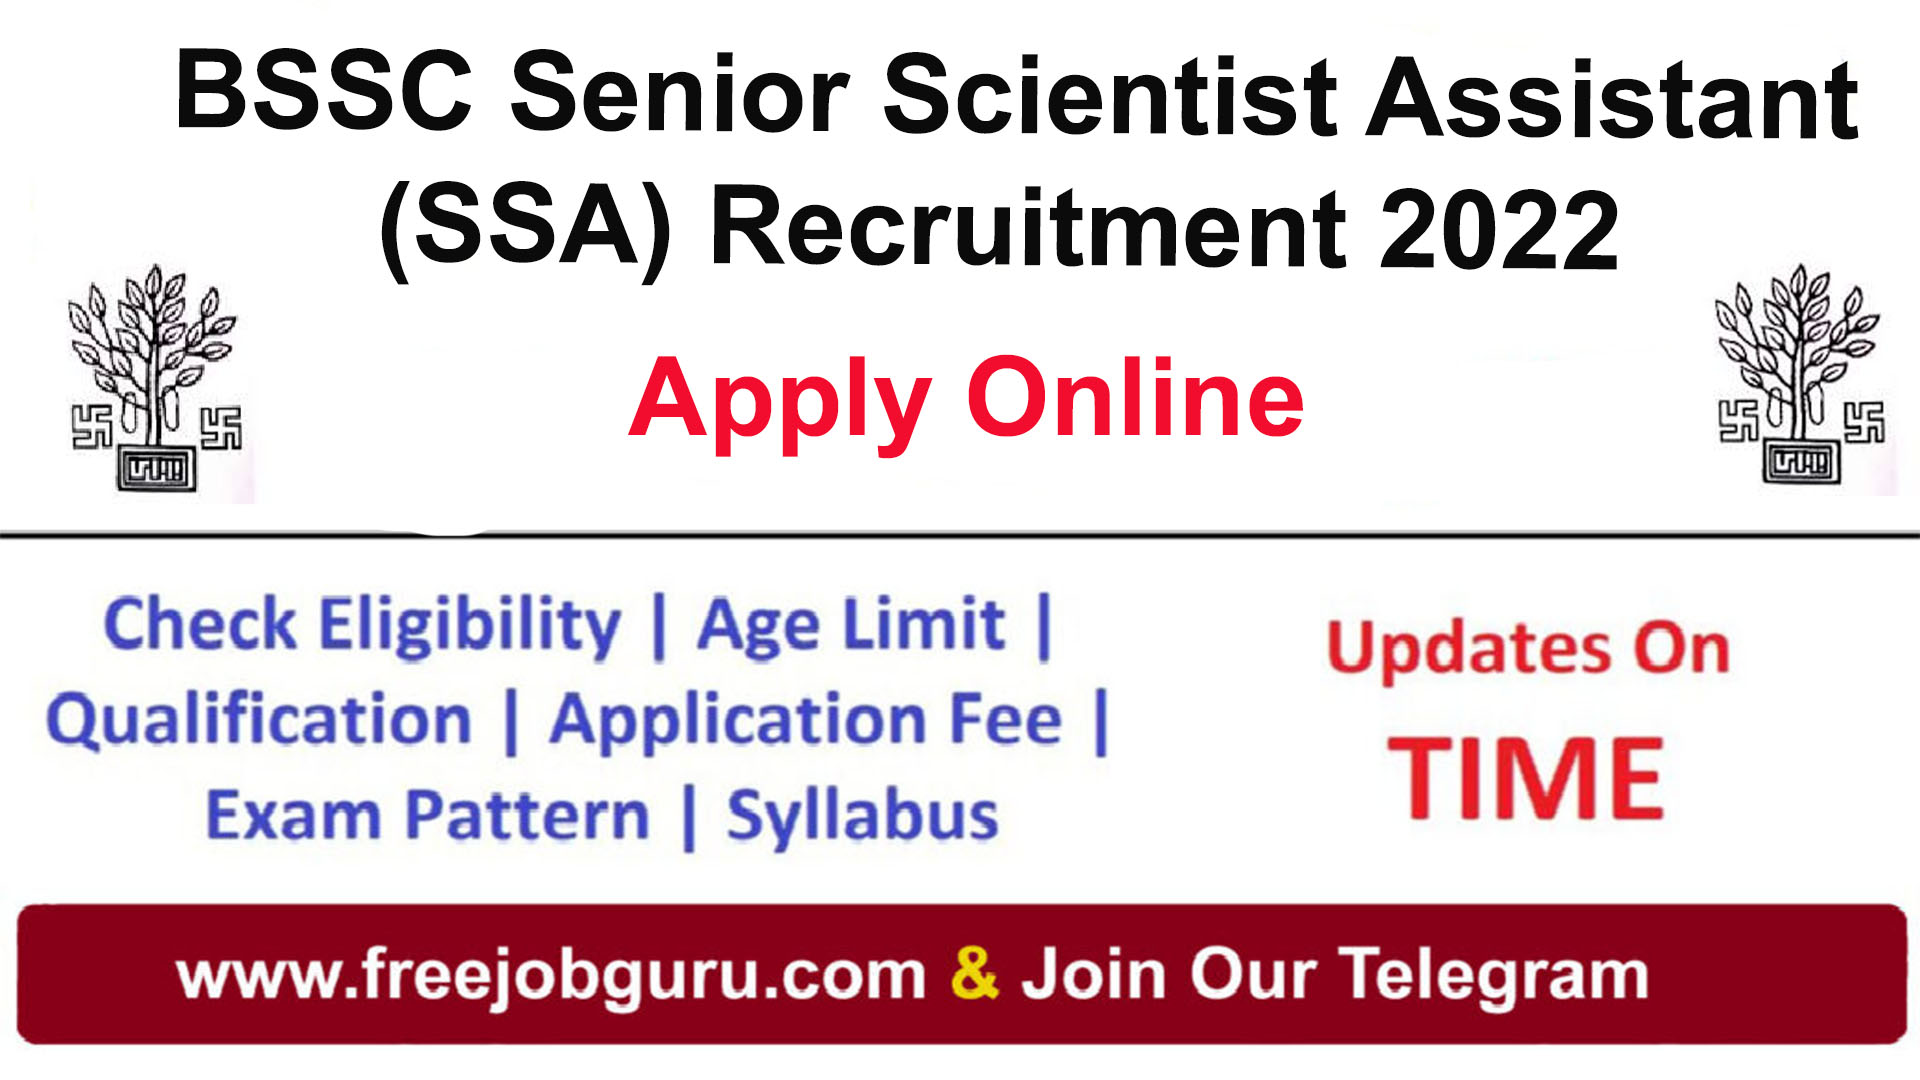 BSSC Senior Scientist Assistant SSA Recruitment 2022